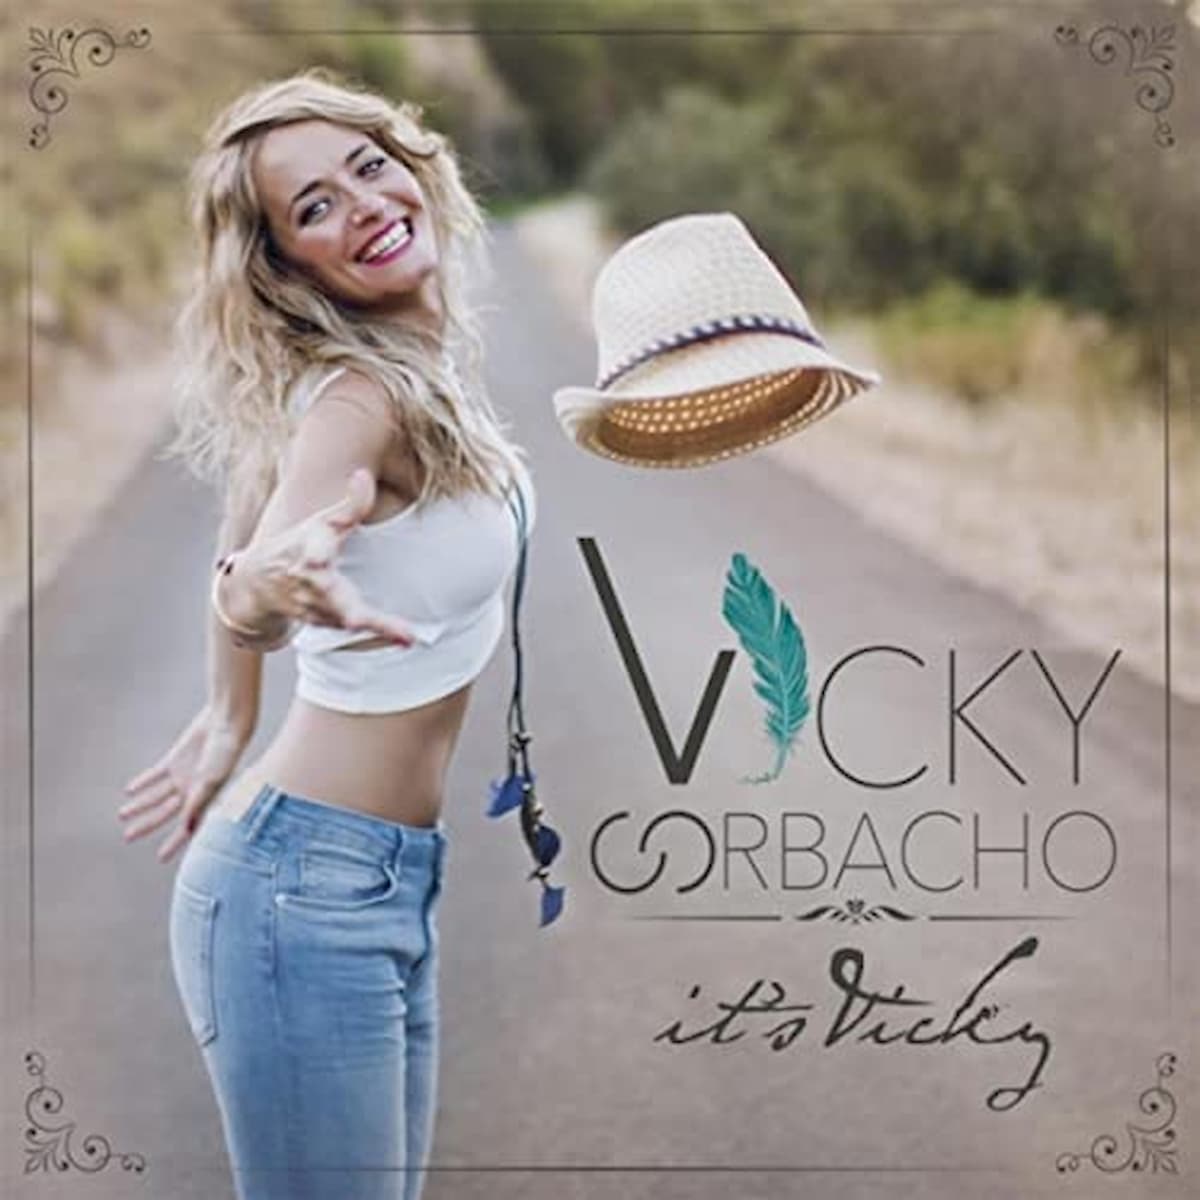 Vicky Corbacho - Album "It's Vicky" (Bachata)